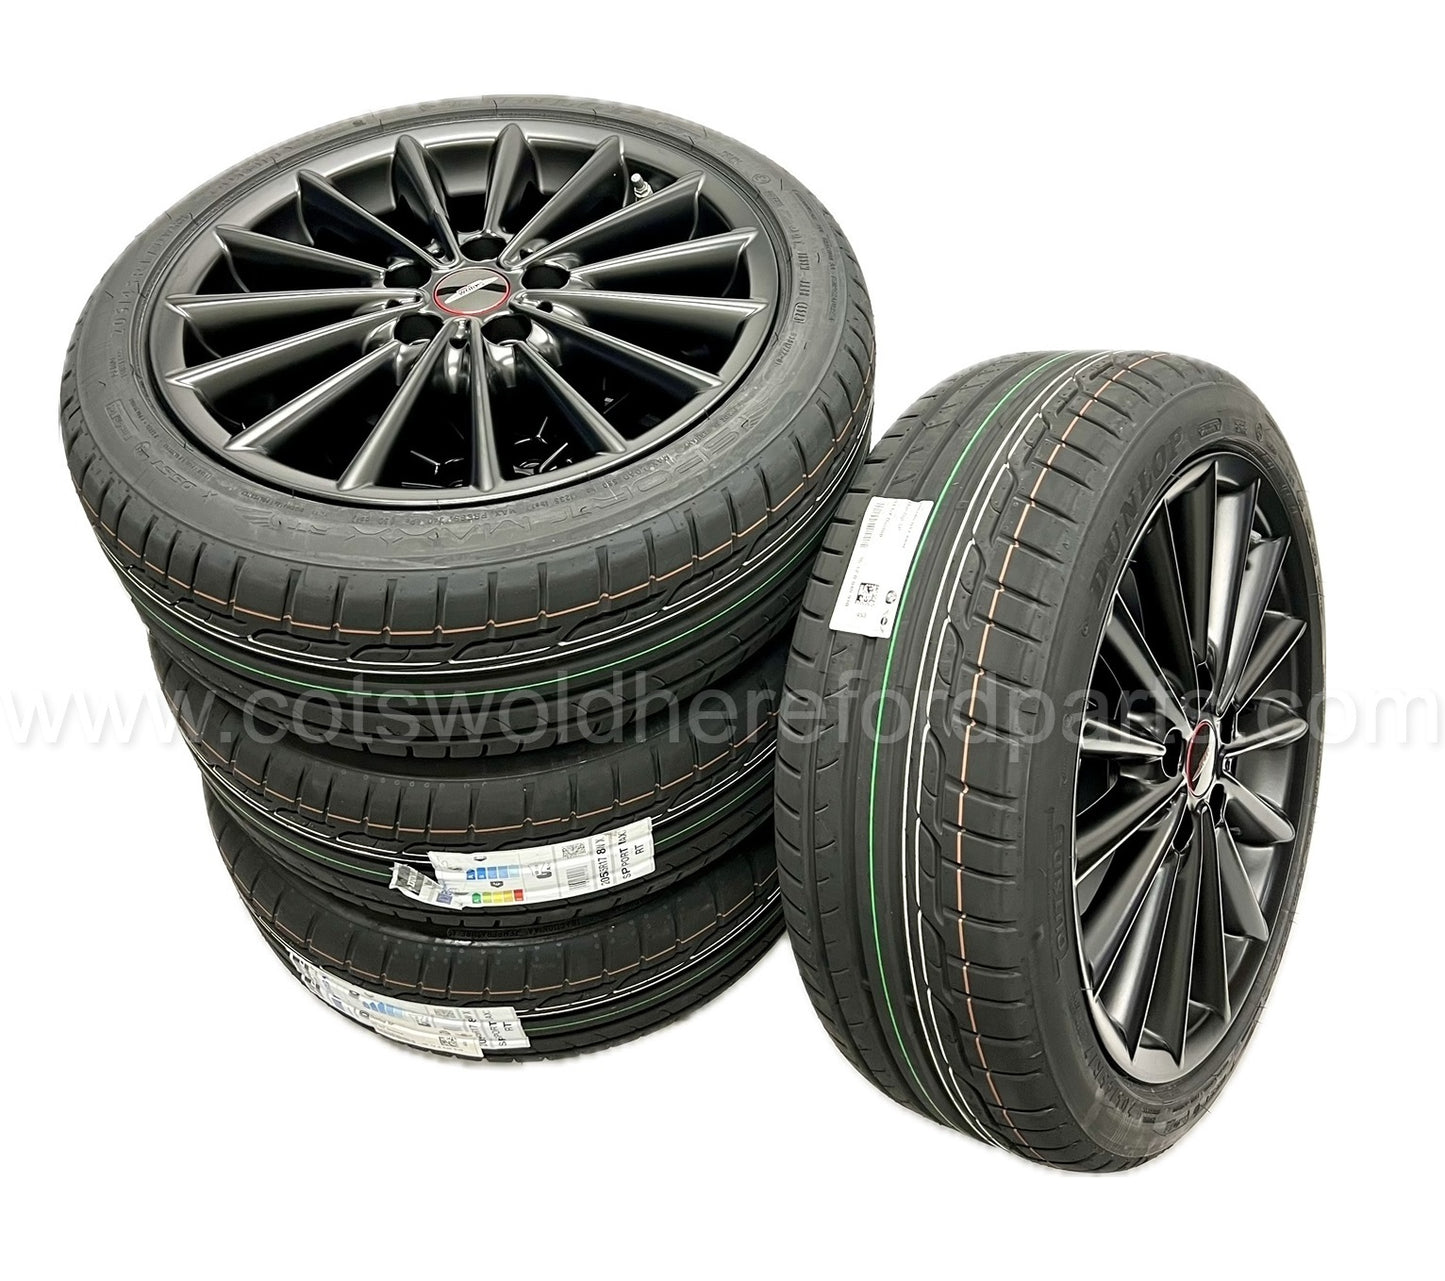 Genuine MINI RDC JCW 17" Wheel And Tyre Set Matt Black 36112459604